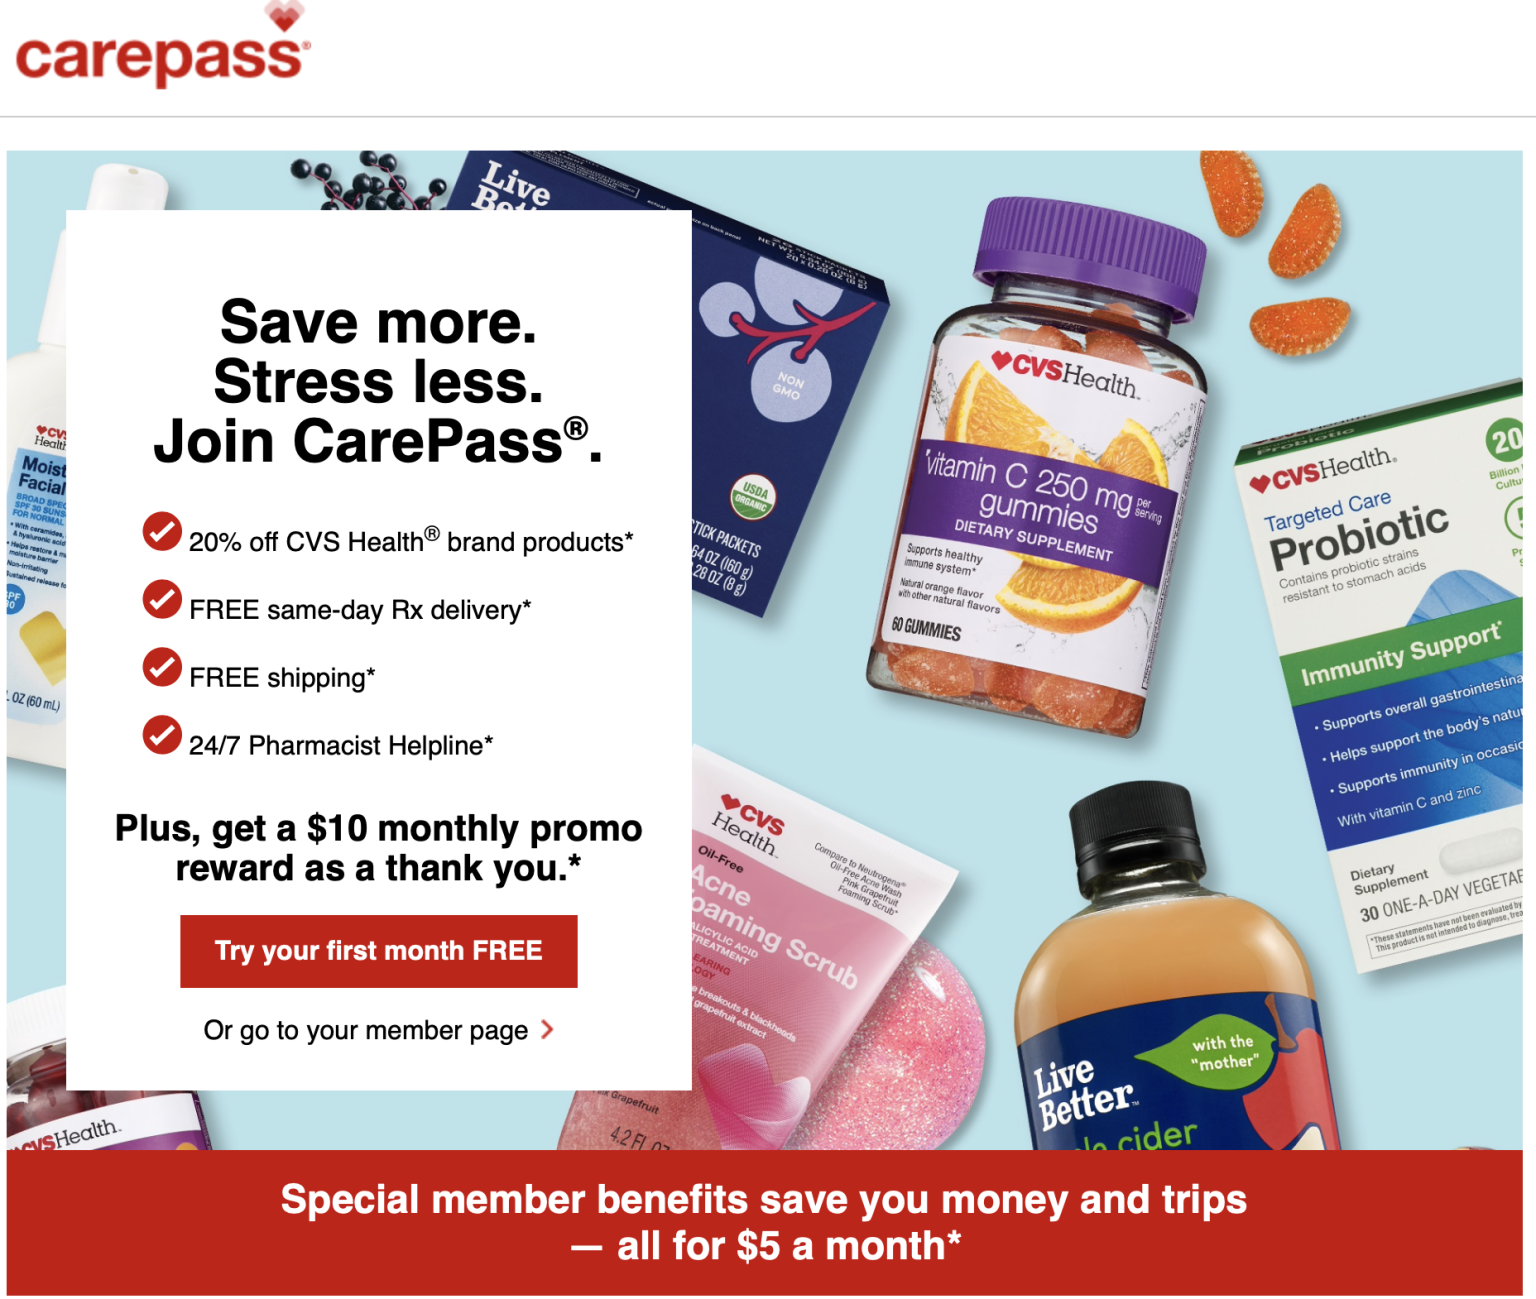 Prueba CVS CarePass gratis por un mes y recibe 10 Súper Baratísimo